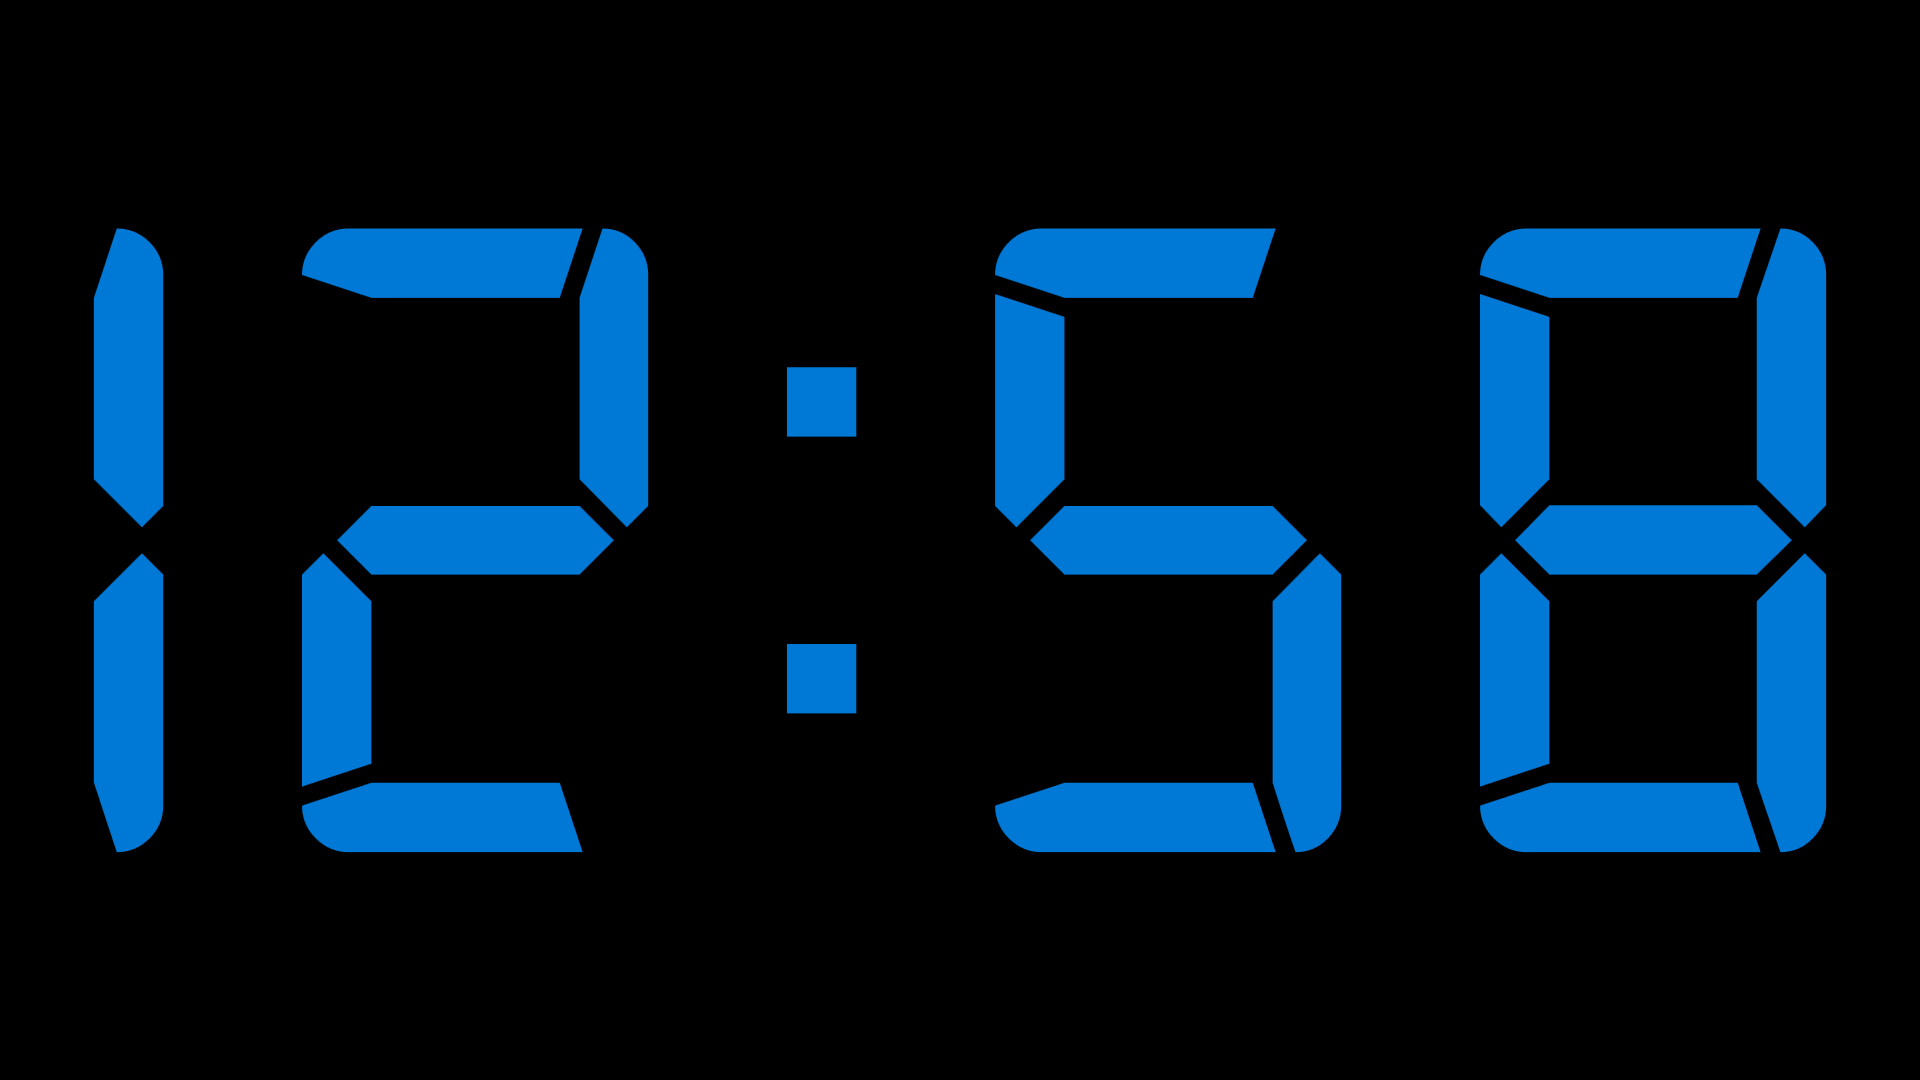 Часы Digital Clock 200730138828.4. Цифровые часы на экран. Скринсейвер электронные часы. Большие электронные часы. Установка экрана на часы